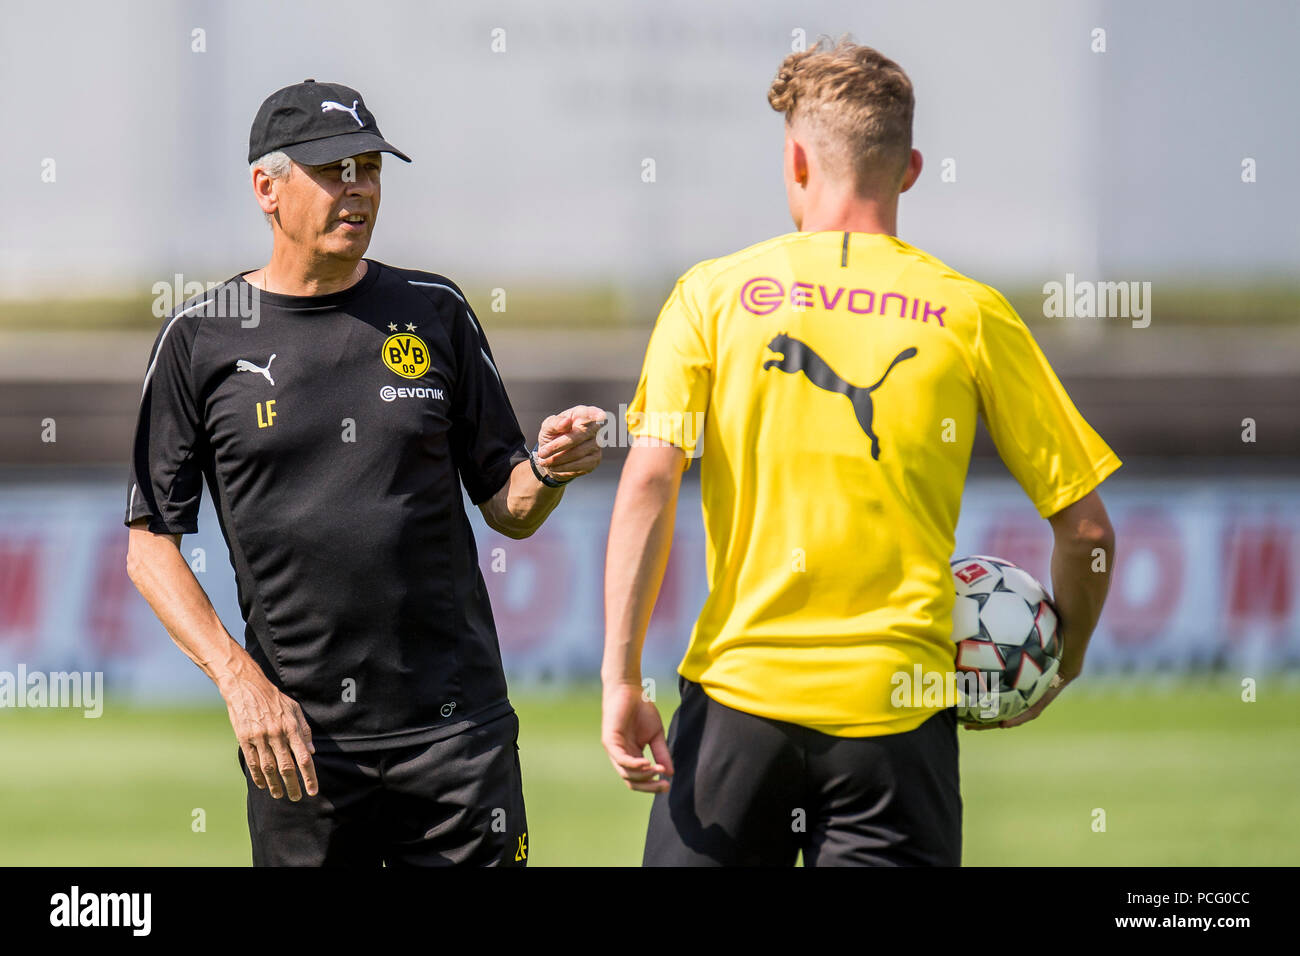 Bad Ragaz, Switzerland. 02nd Aug, 2018. Soccer, training camp Borussia  Dortmund. Dortmund's coach Lucien Favre (L) talks to player Dzenis Burnic.  Credit: David Inderlied/dpa/Alamy Live News Stock Photo - Alamy